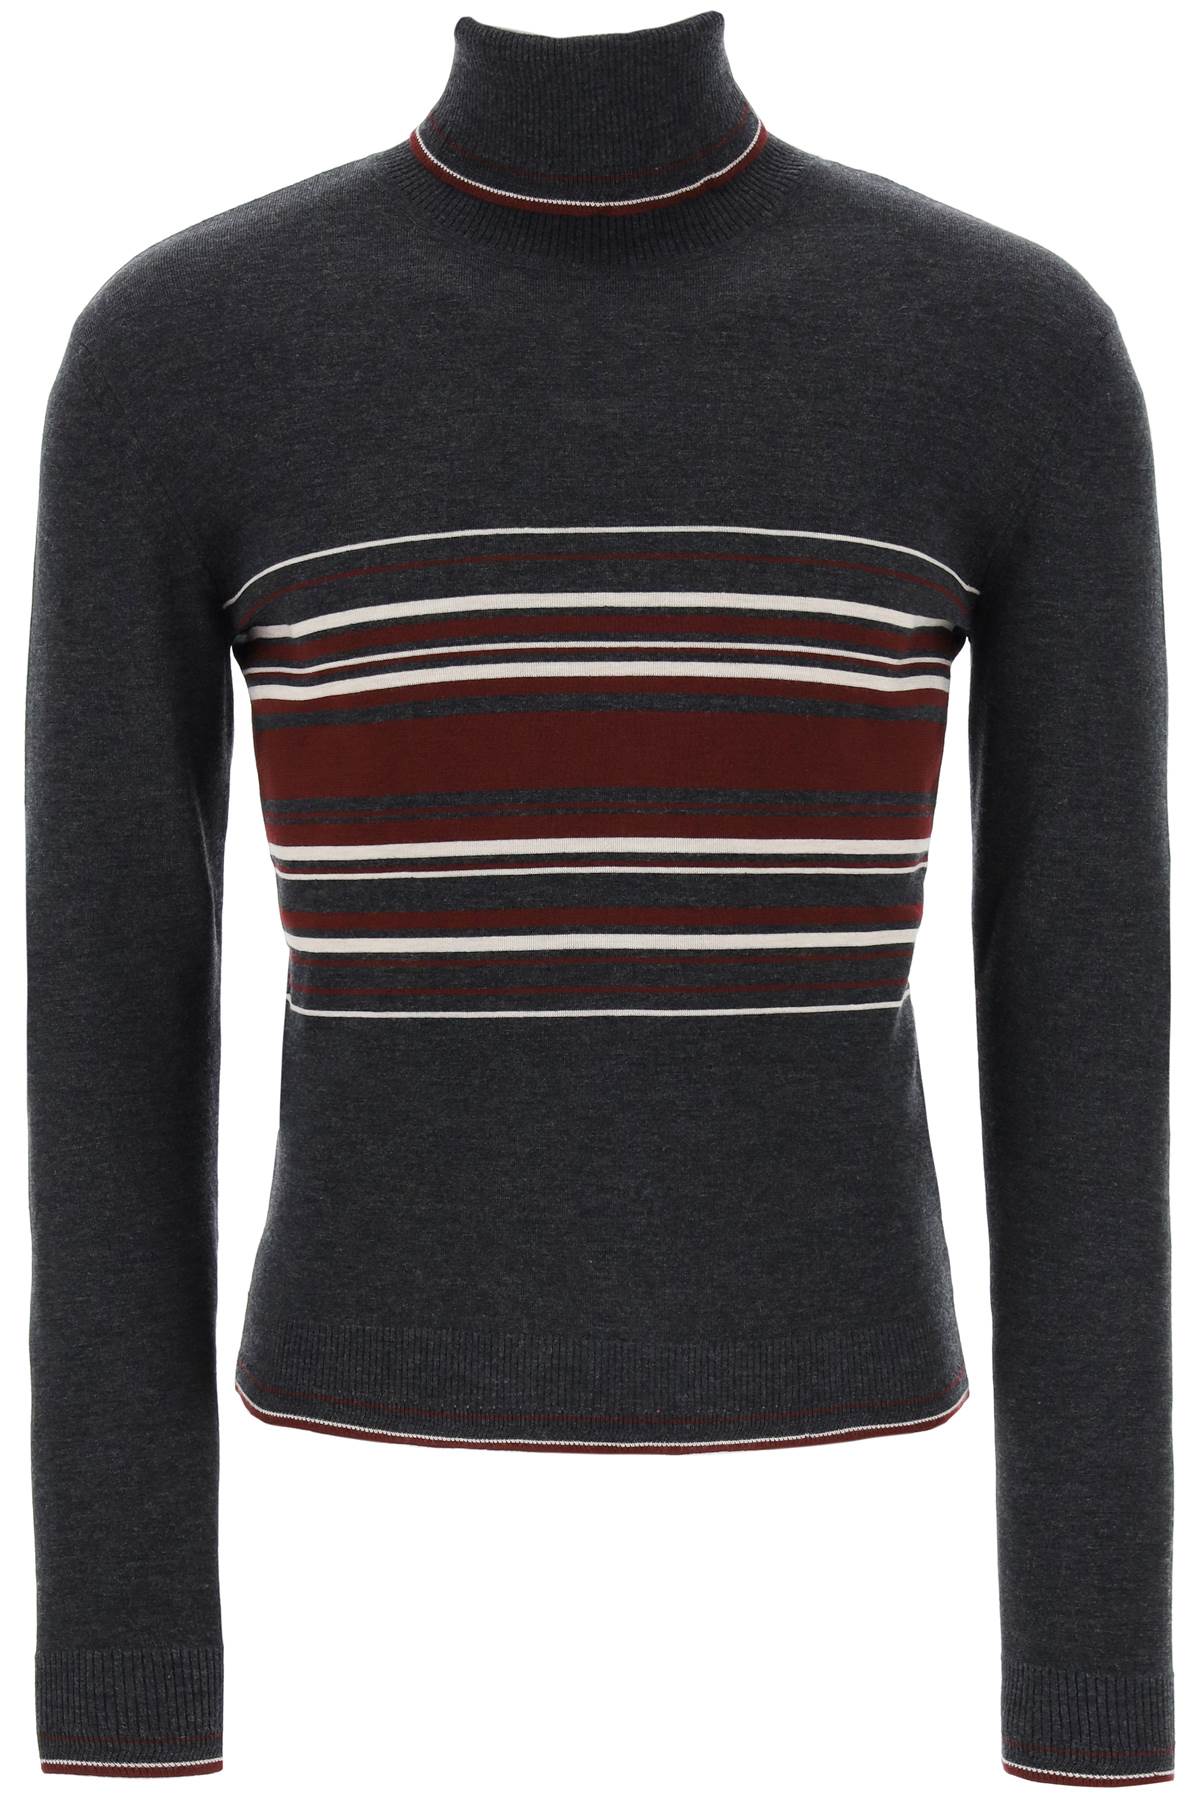 Dolce & gabbana striped wool turtleneck sweater-0